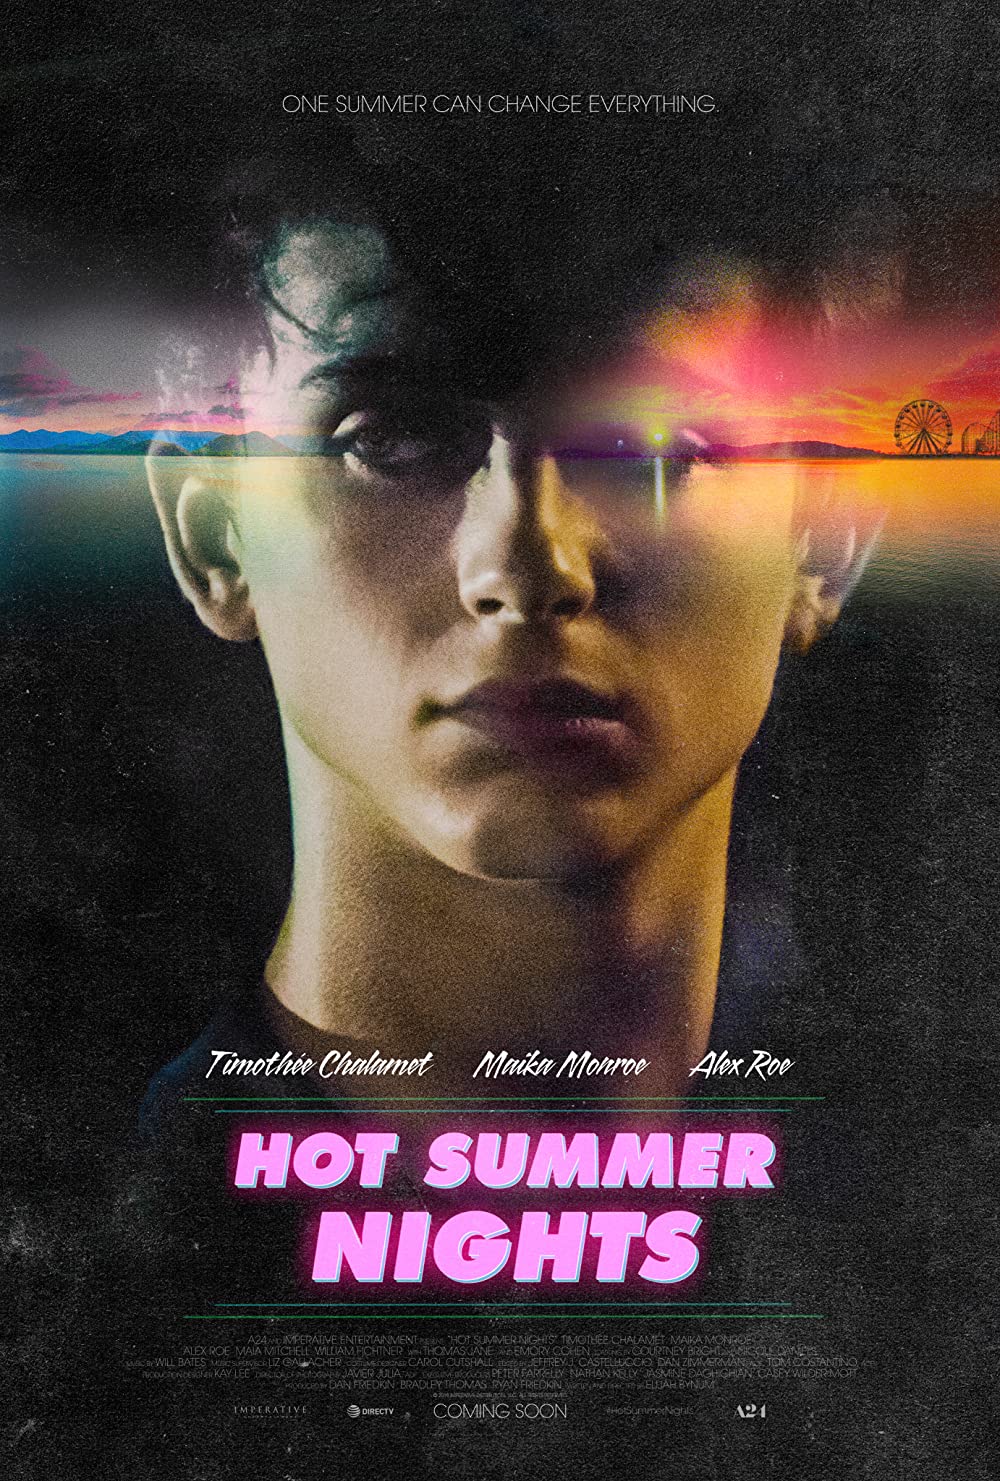 Filmbeschreibung zu Hot Summer Nights